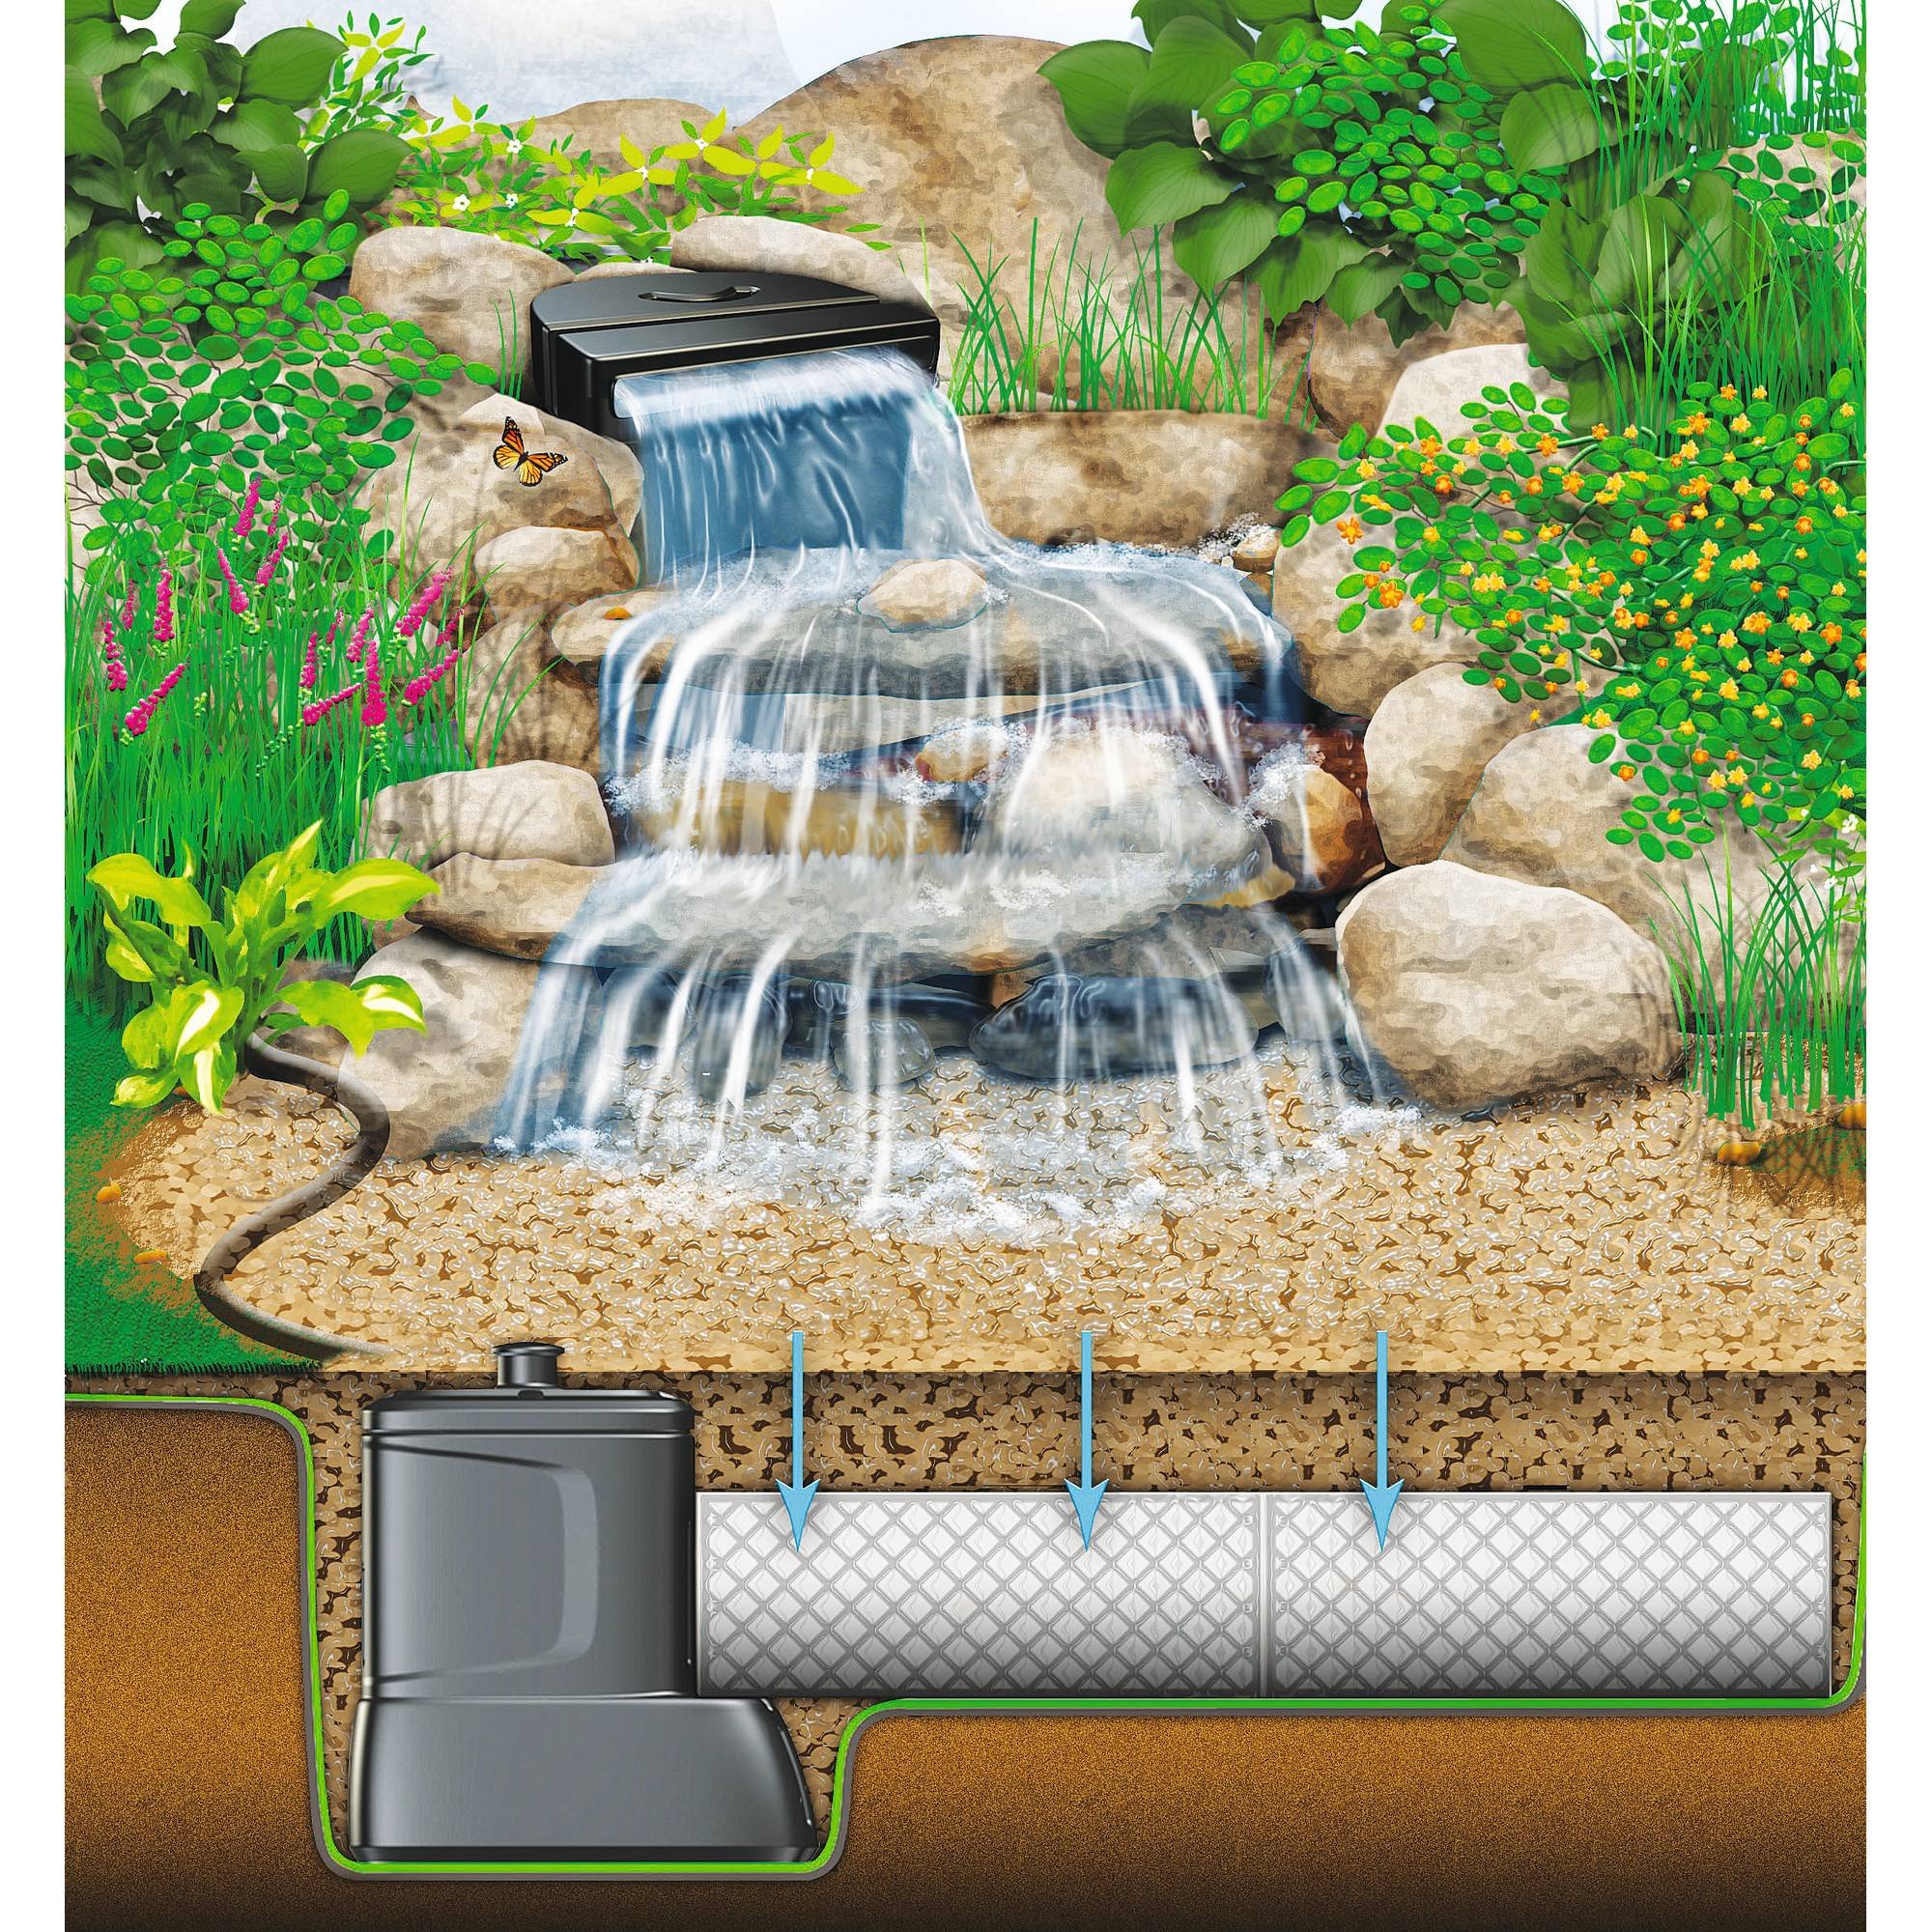 ÖkoBalance-Teichsystem-Komponente PROFI Pond Aqua Blocks von Heissner